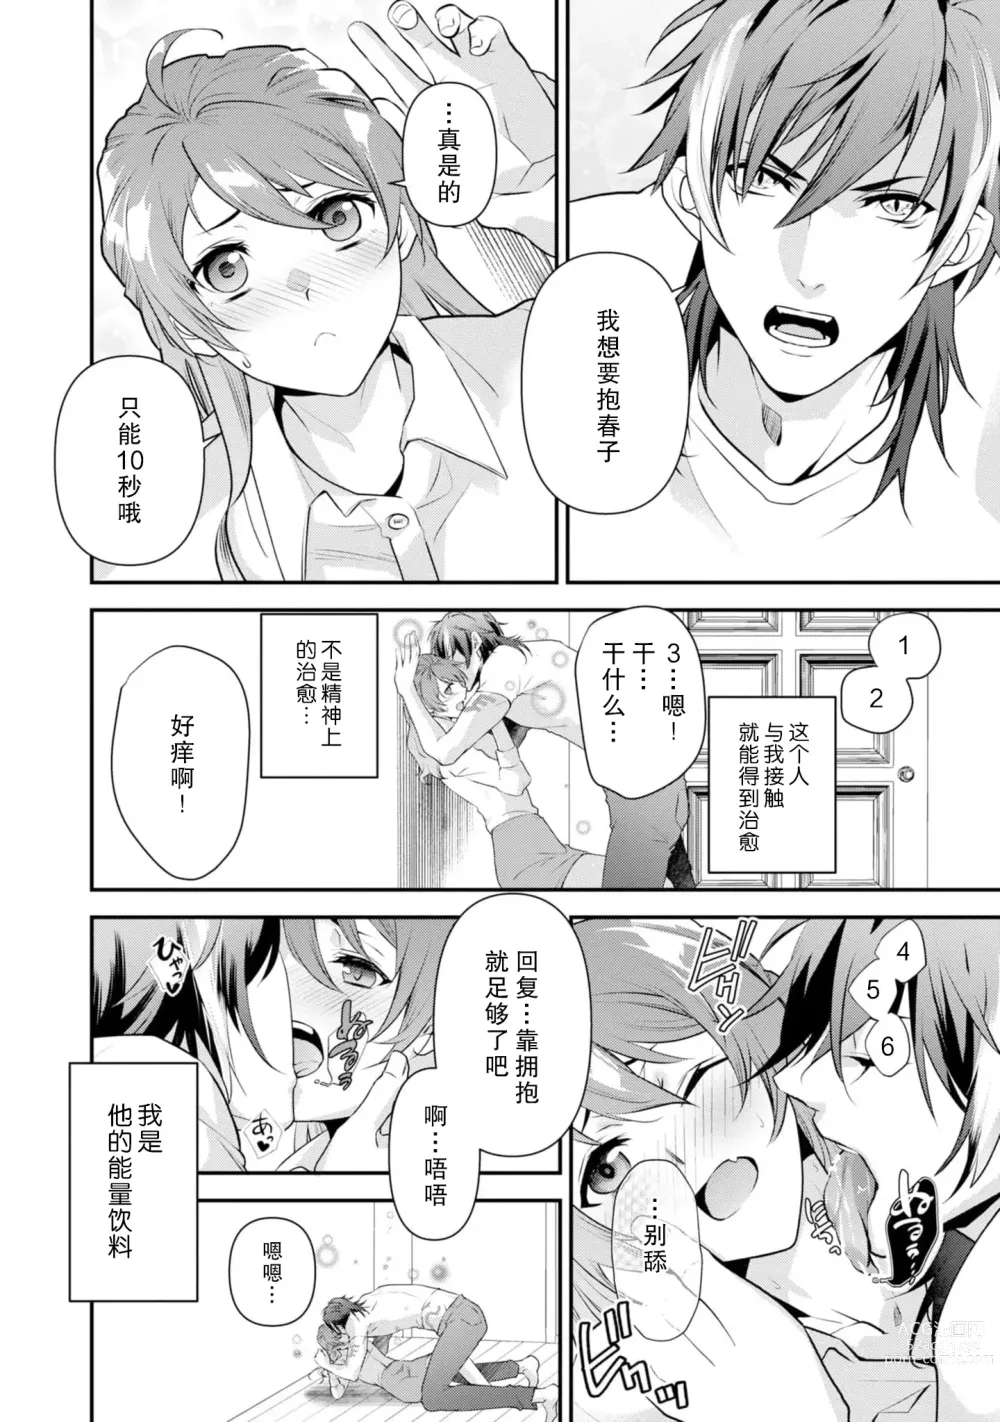 Page 5 of manga 最终BOSS转生而来，因此拿下了他的童贞 1-9 end